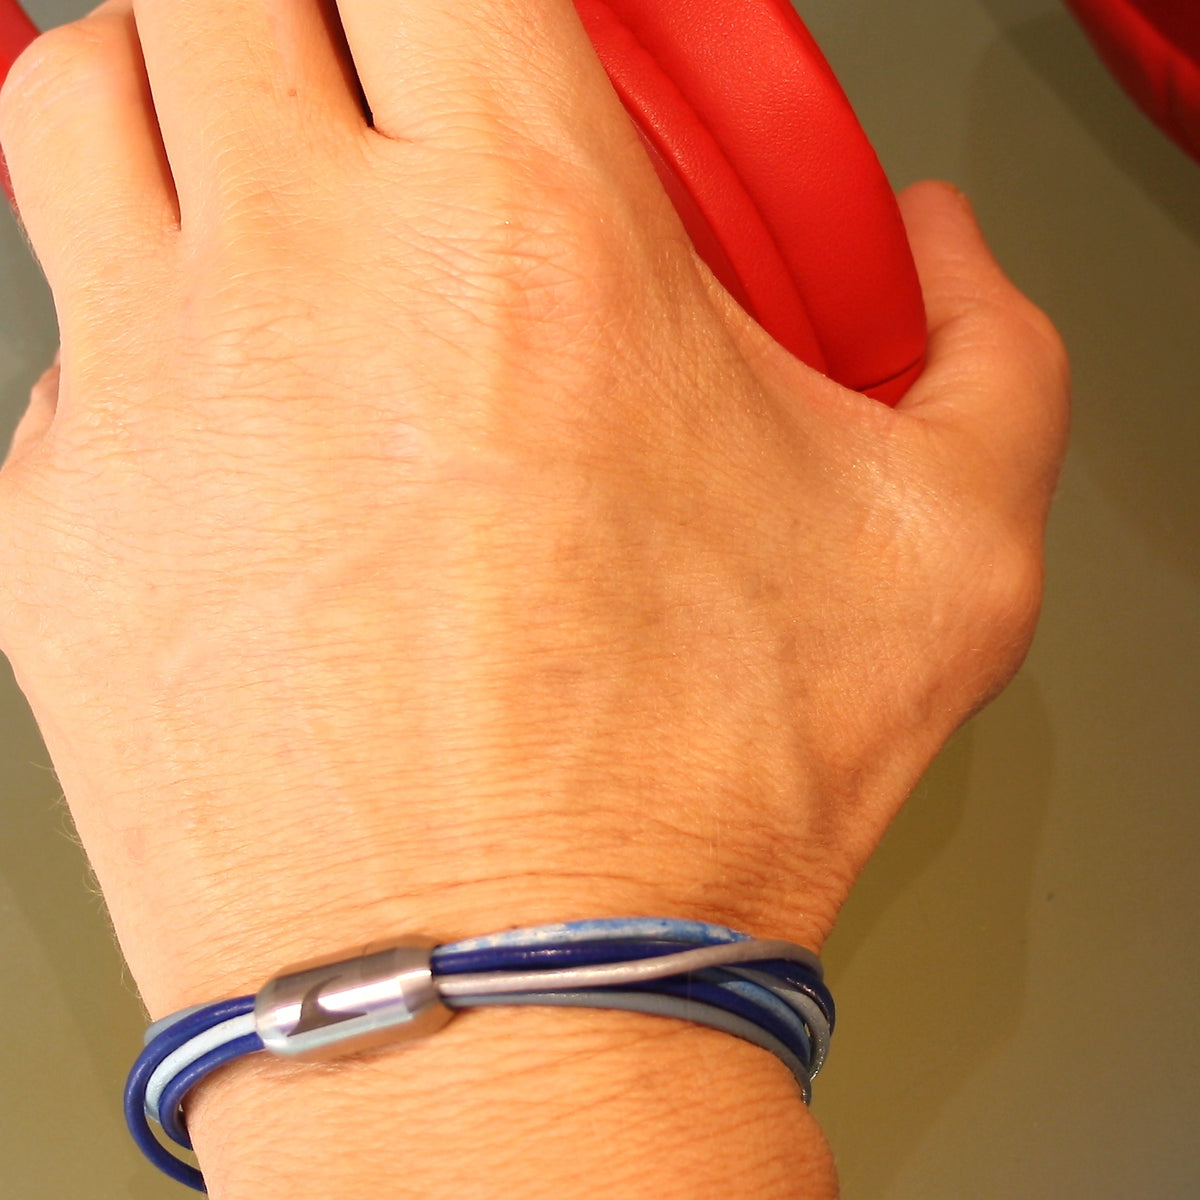 Damen-Leder-armband-fem-ocean-marine-blau-hellblau-multicolor-silber-Edelstahlverschluss-getragen-wavepirate-shop-r